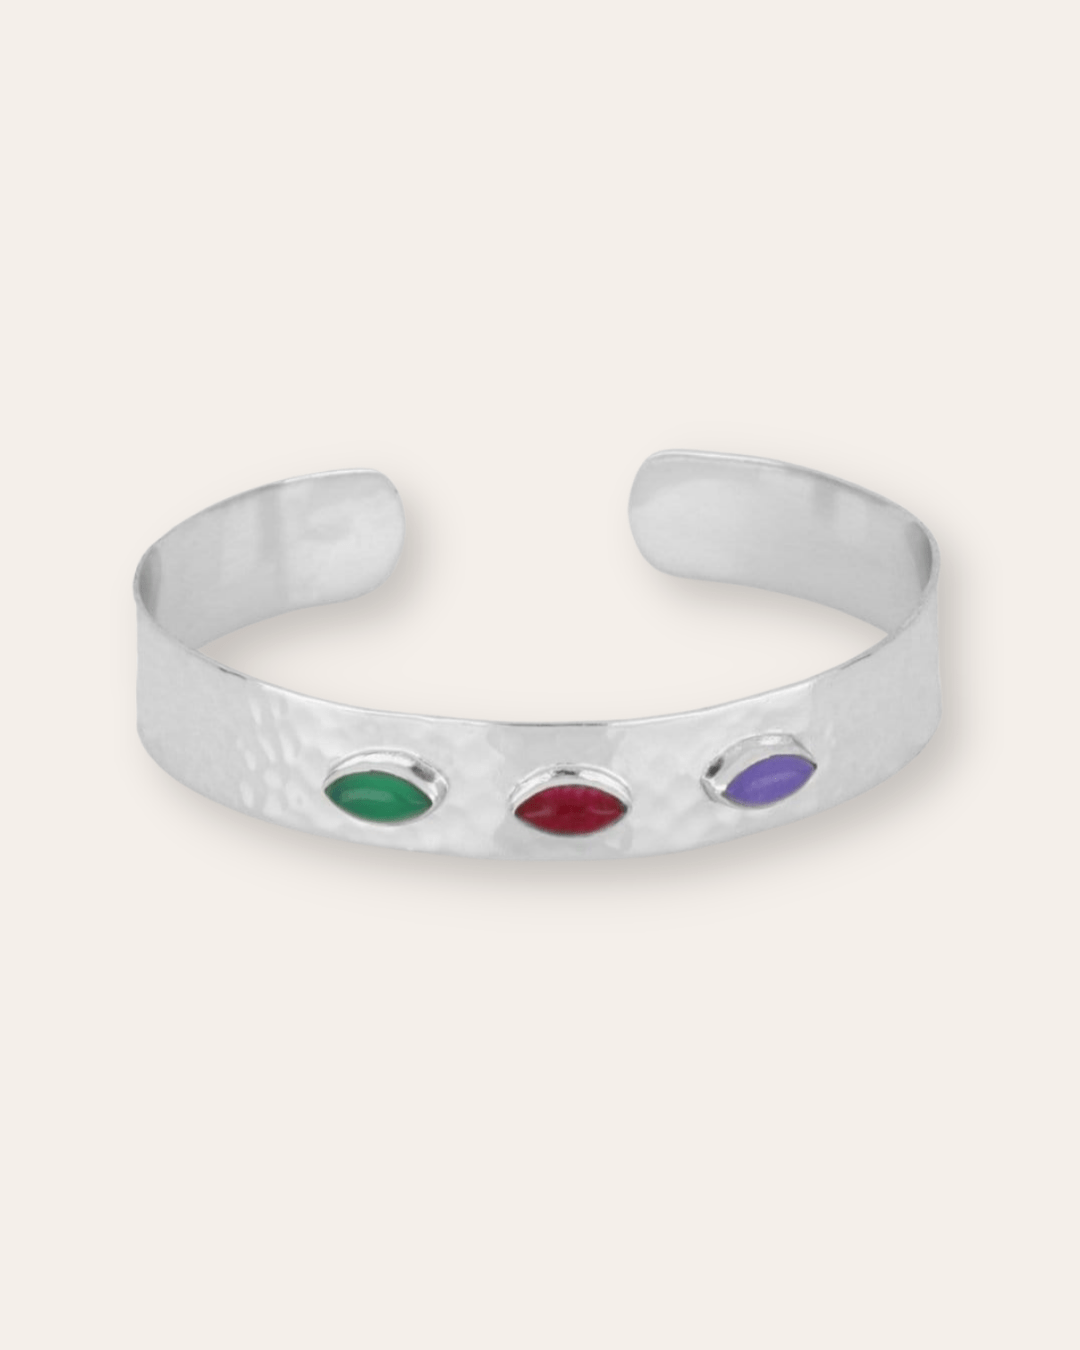 PULSERASheyloveTriple color bracelet | heylove